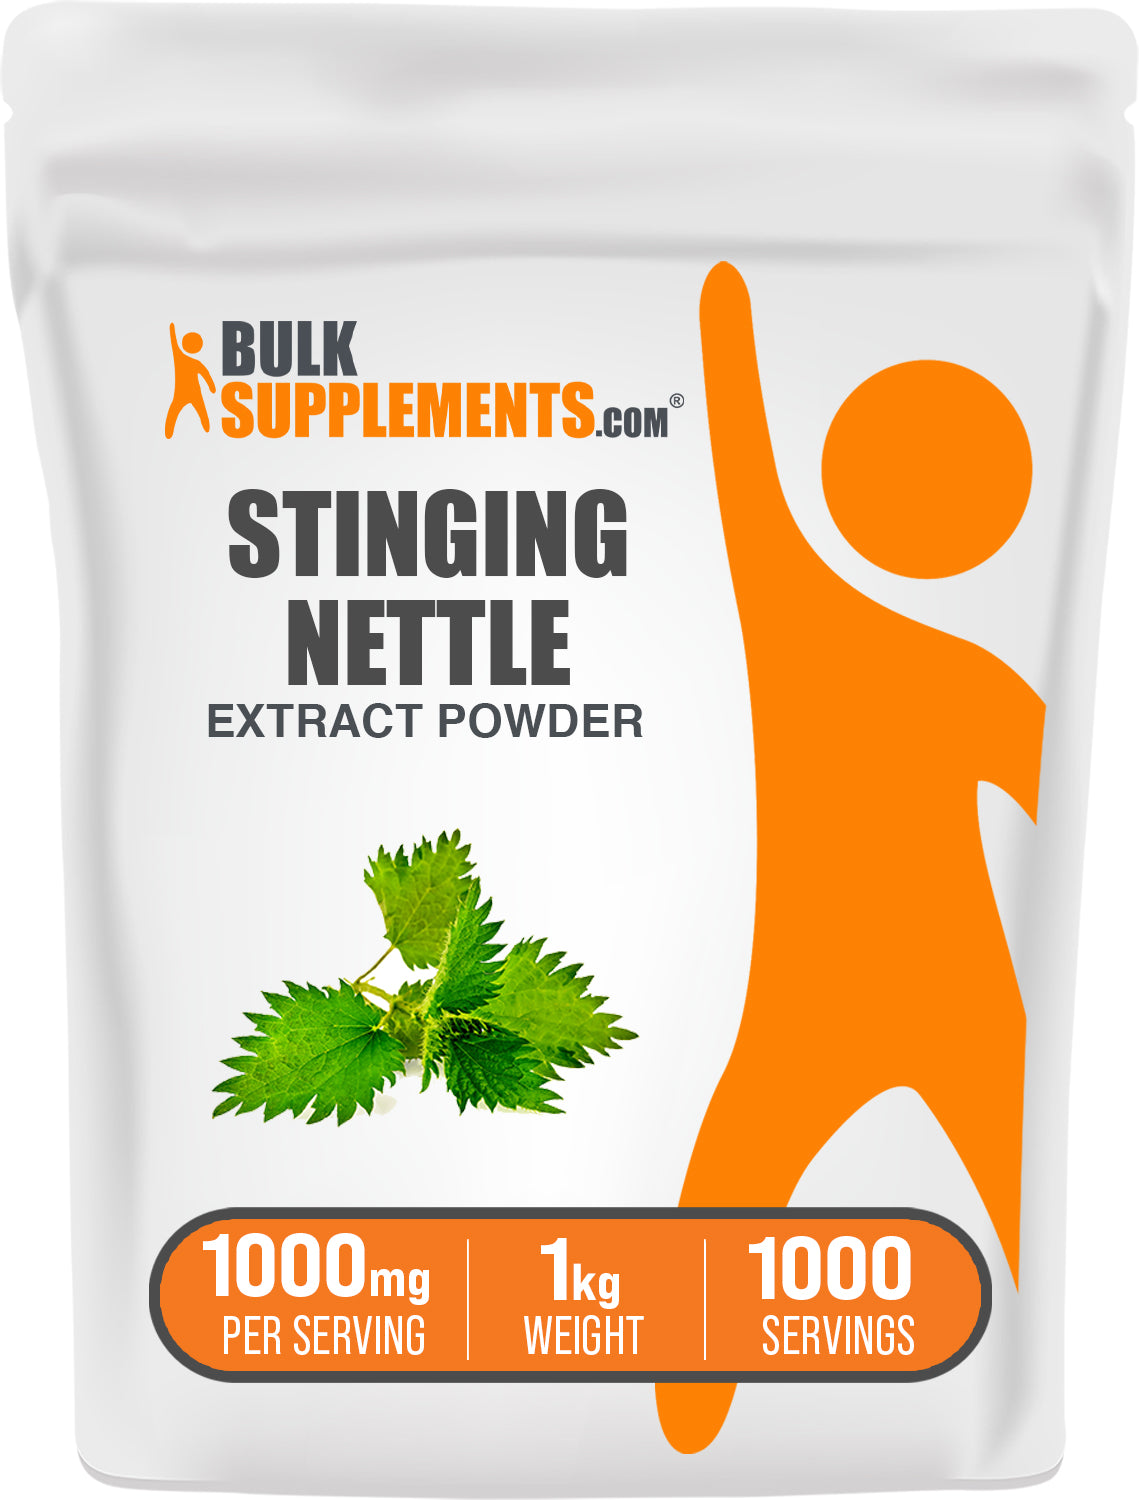 BulkSupplements.com Stinging Nettle Extract Powder 1kg bag